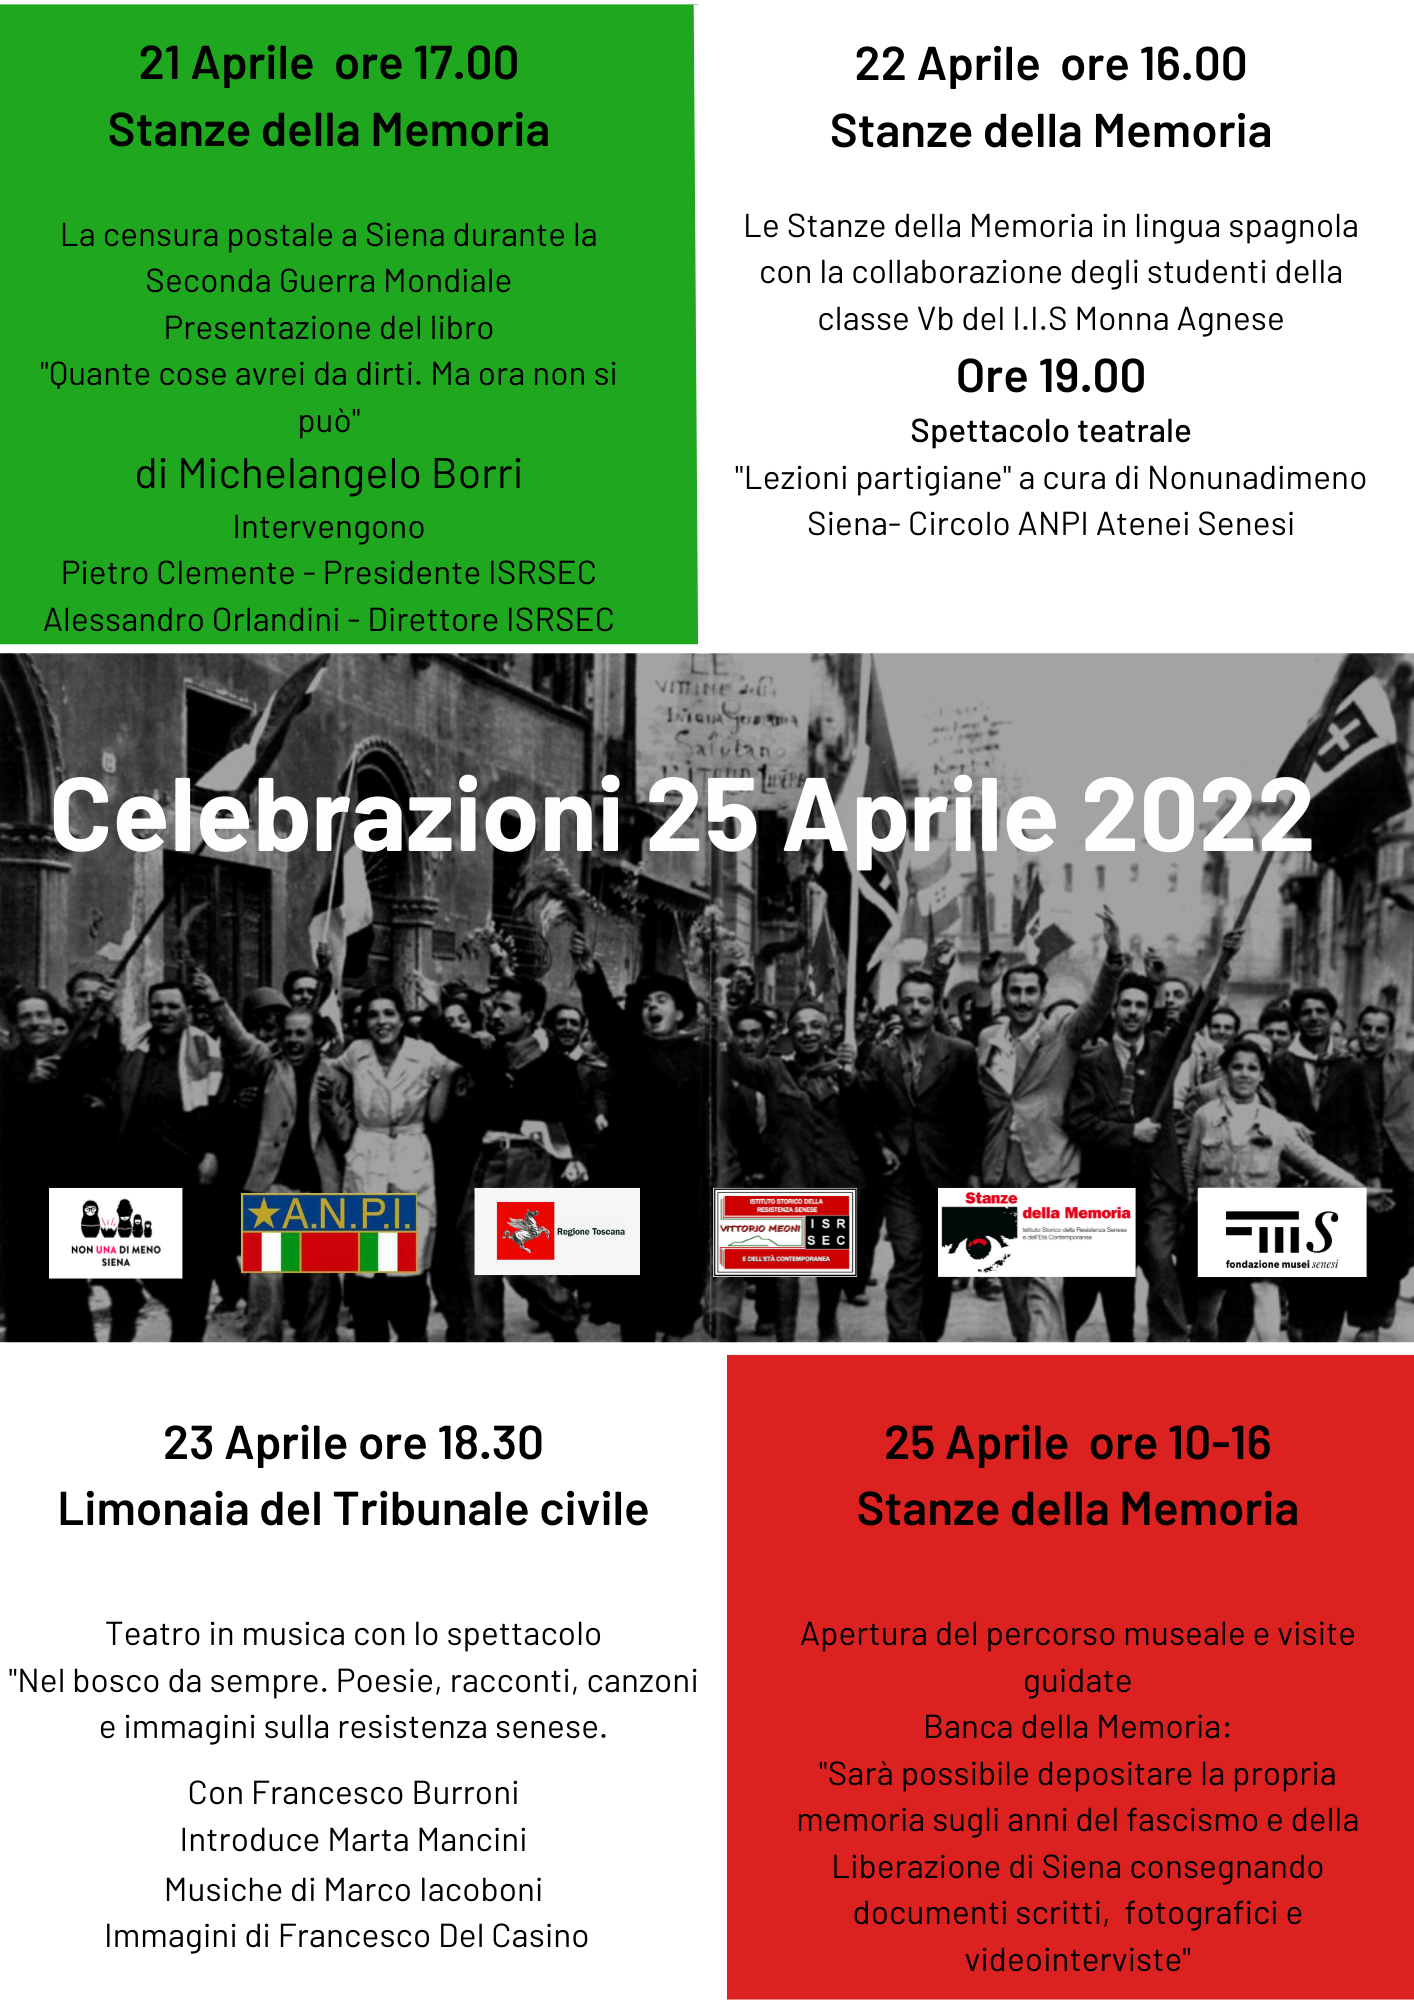 Celebrazioni 25 Aprile 2022 - Generale.png